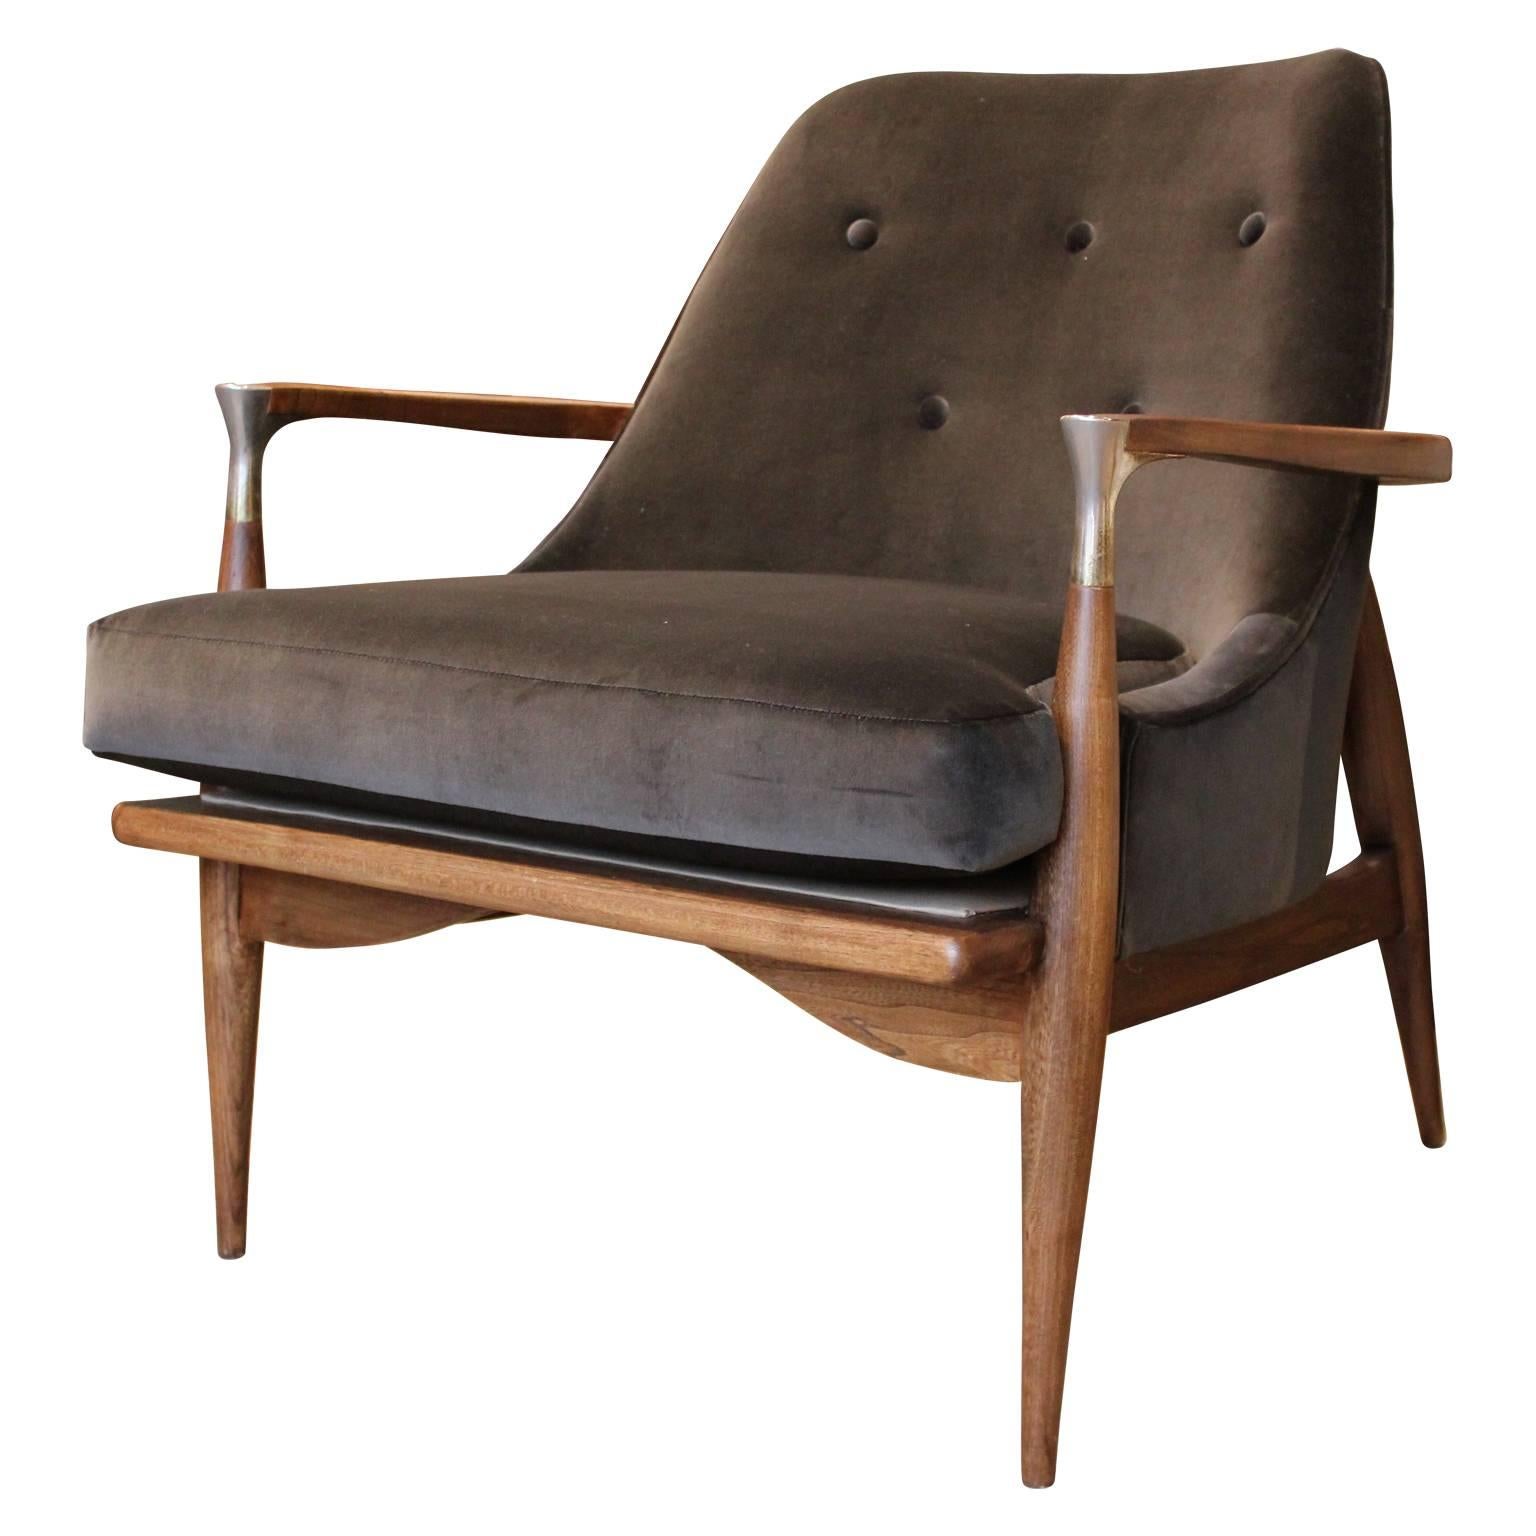 Mid-20th Century Modern Danish Kofod-Larsen Style Lounge Chair in Grey Velvet with Walnut Finish